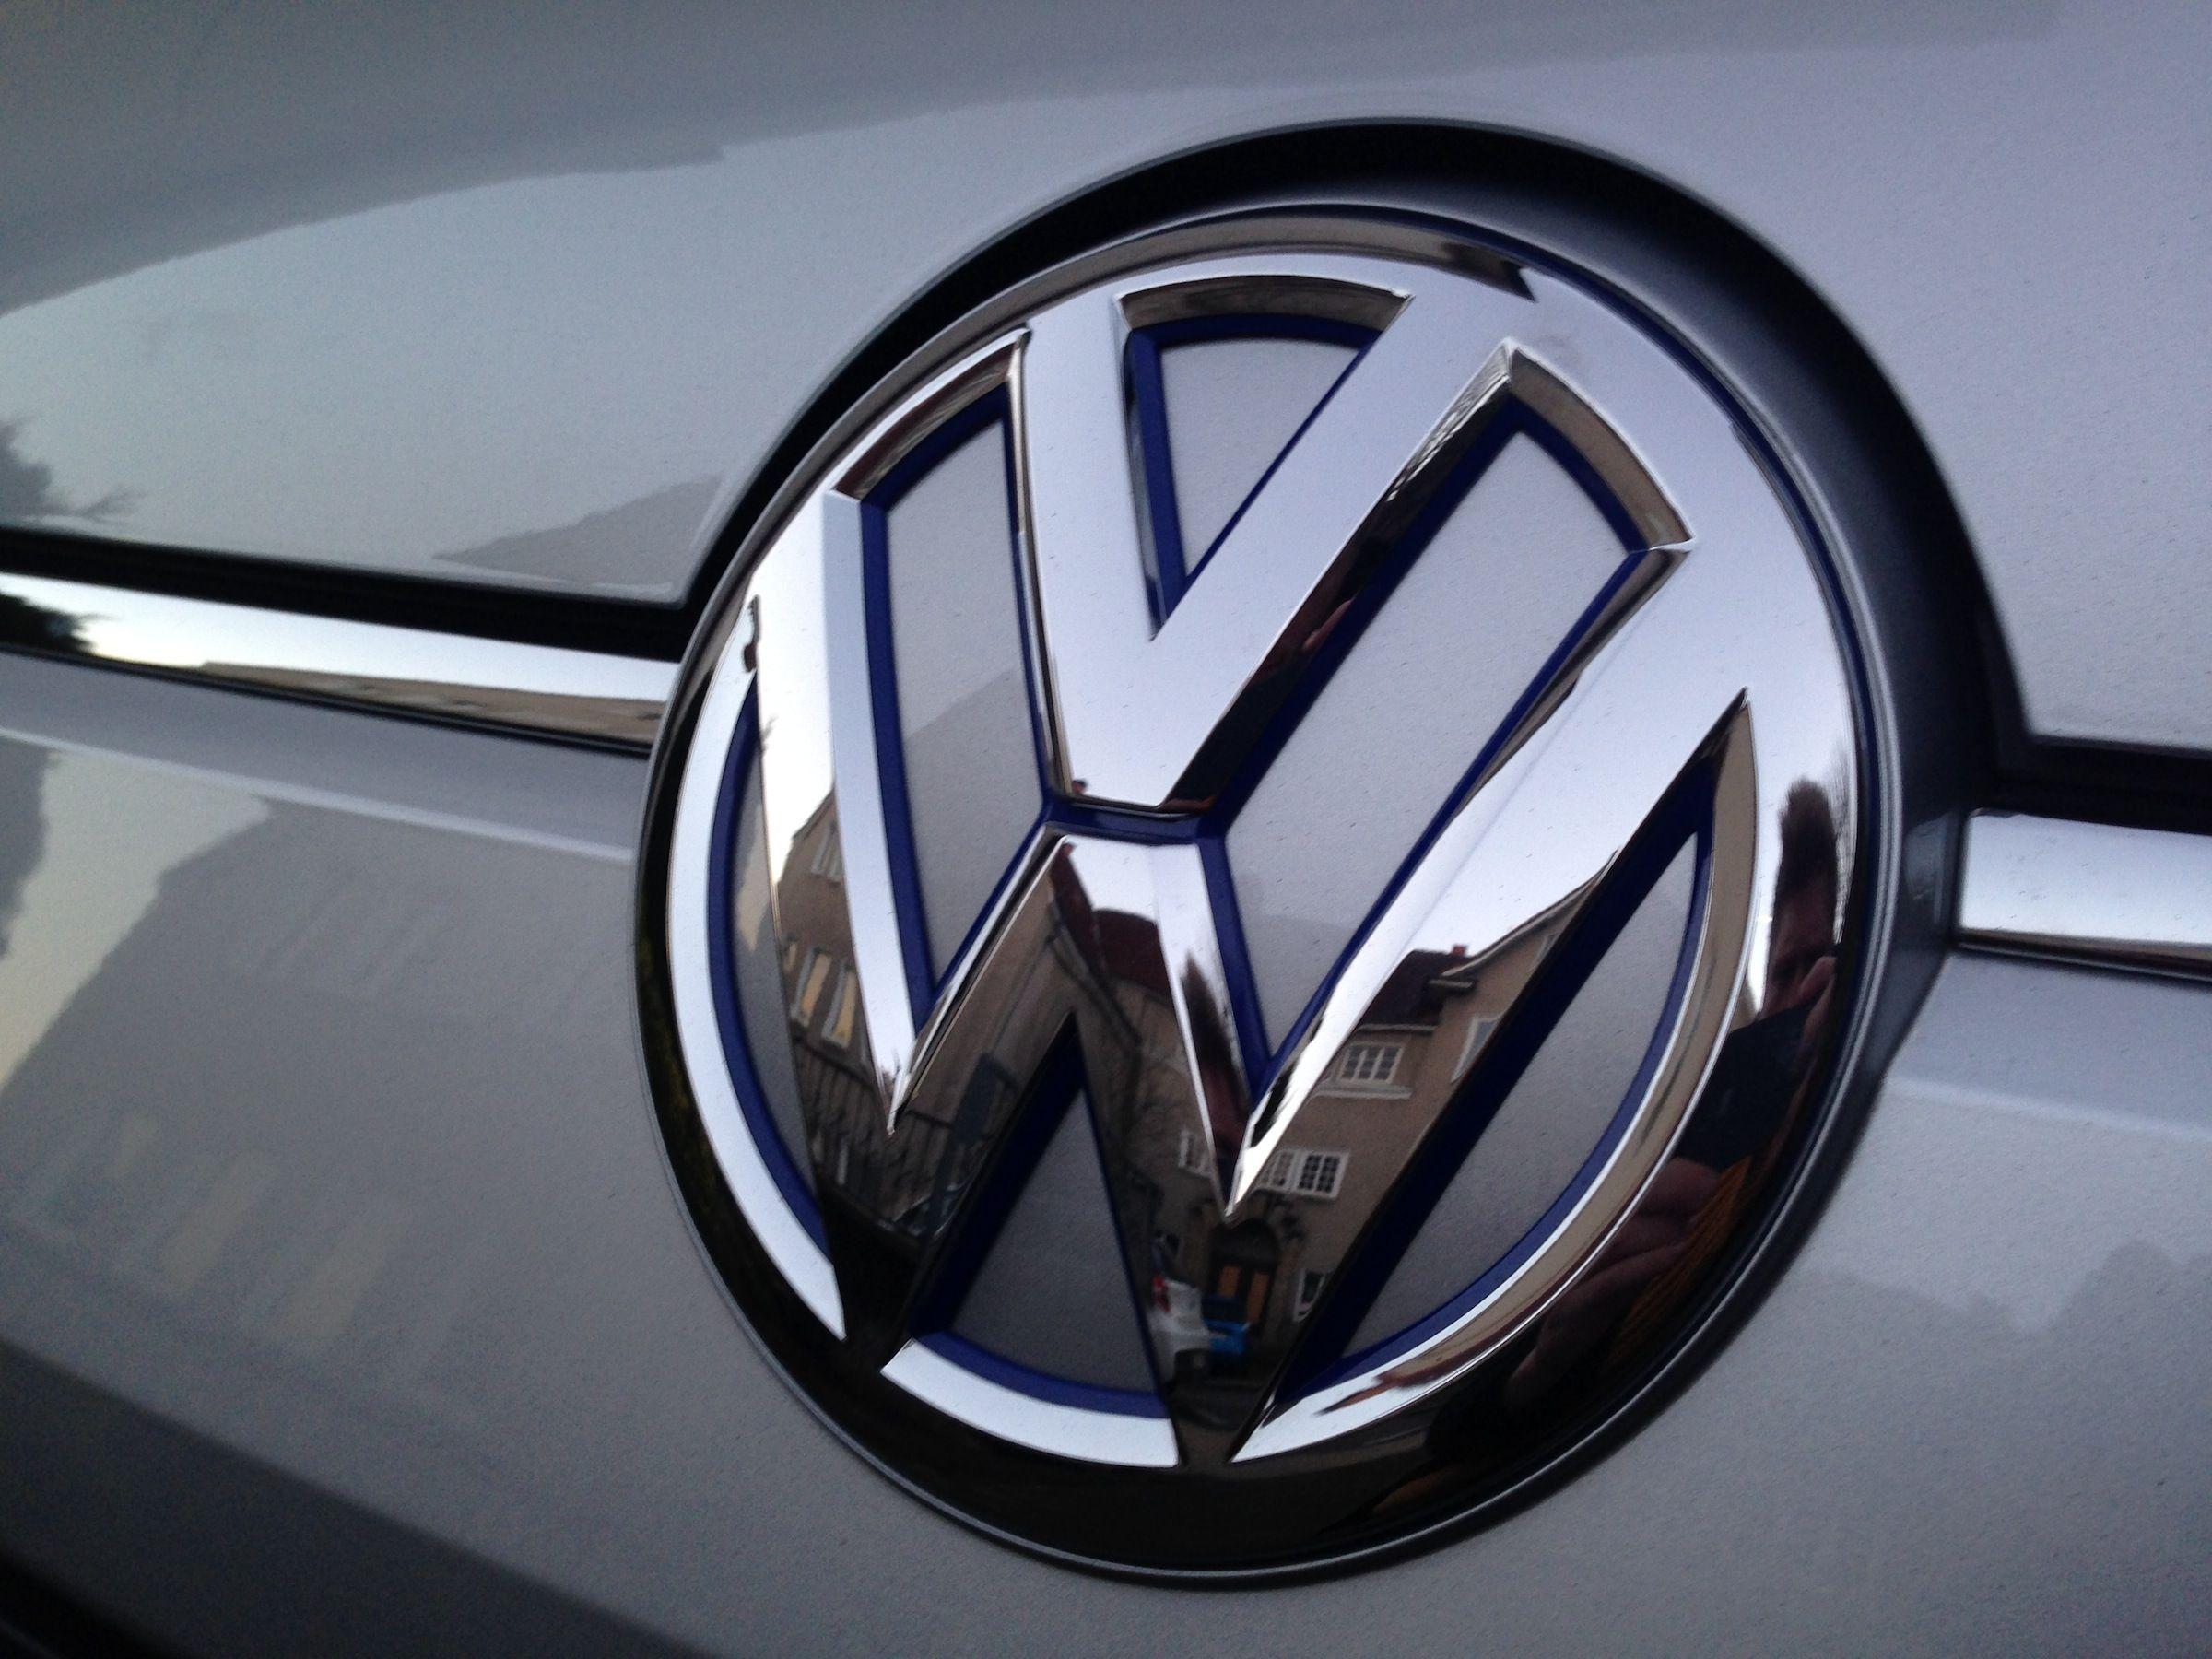 Cool VW Logo - Volkswagen Logo, Volkswagen Car Symbol Meaning and History. Car